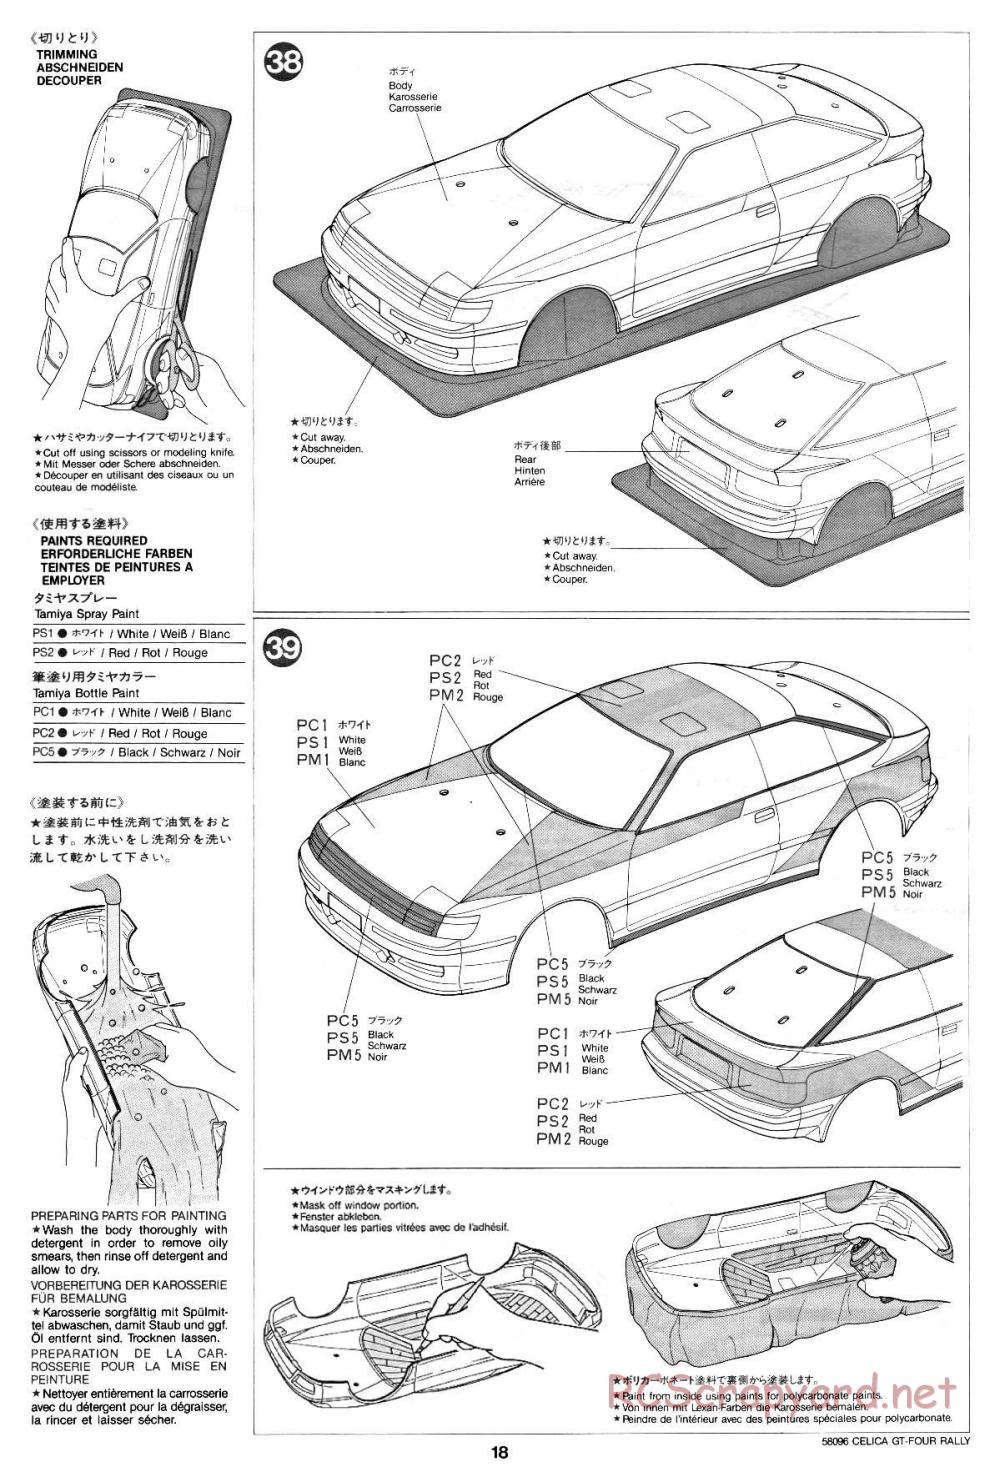 Tamiya - Toyota Celica GT-Four Rally - 58096 - Manual - Page 18